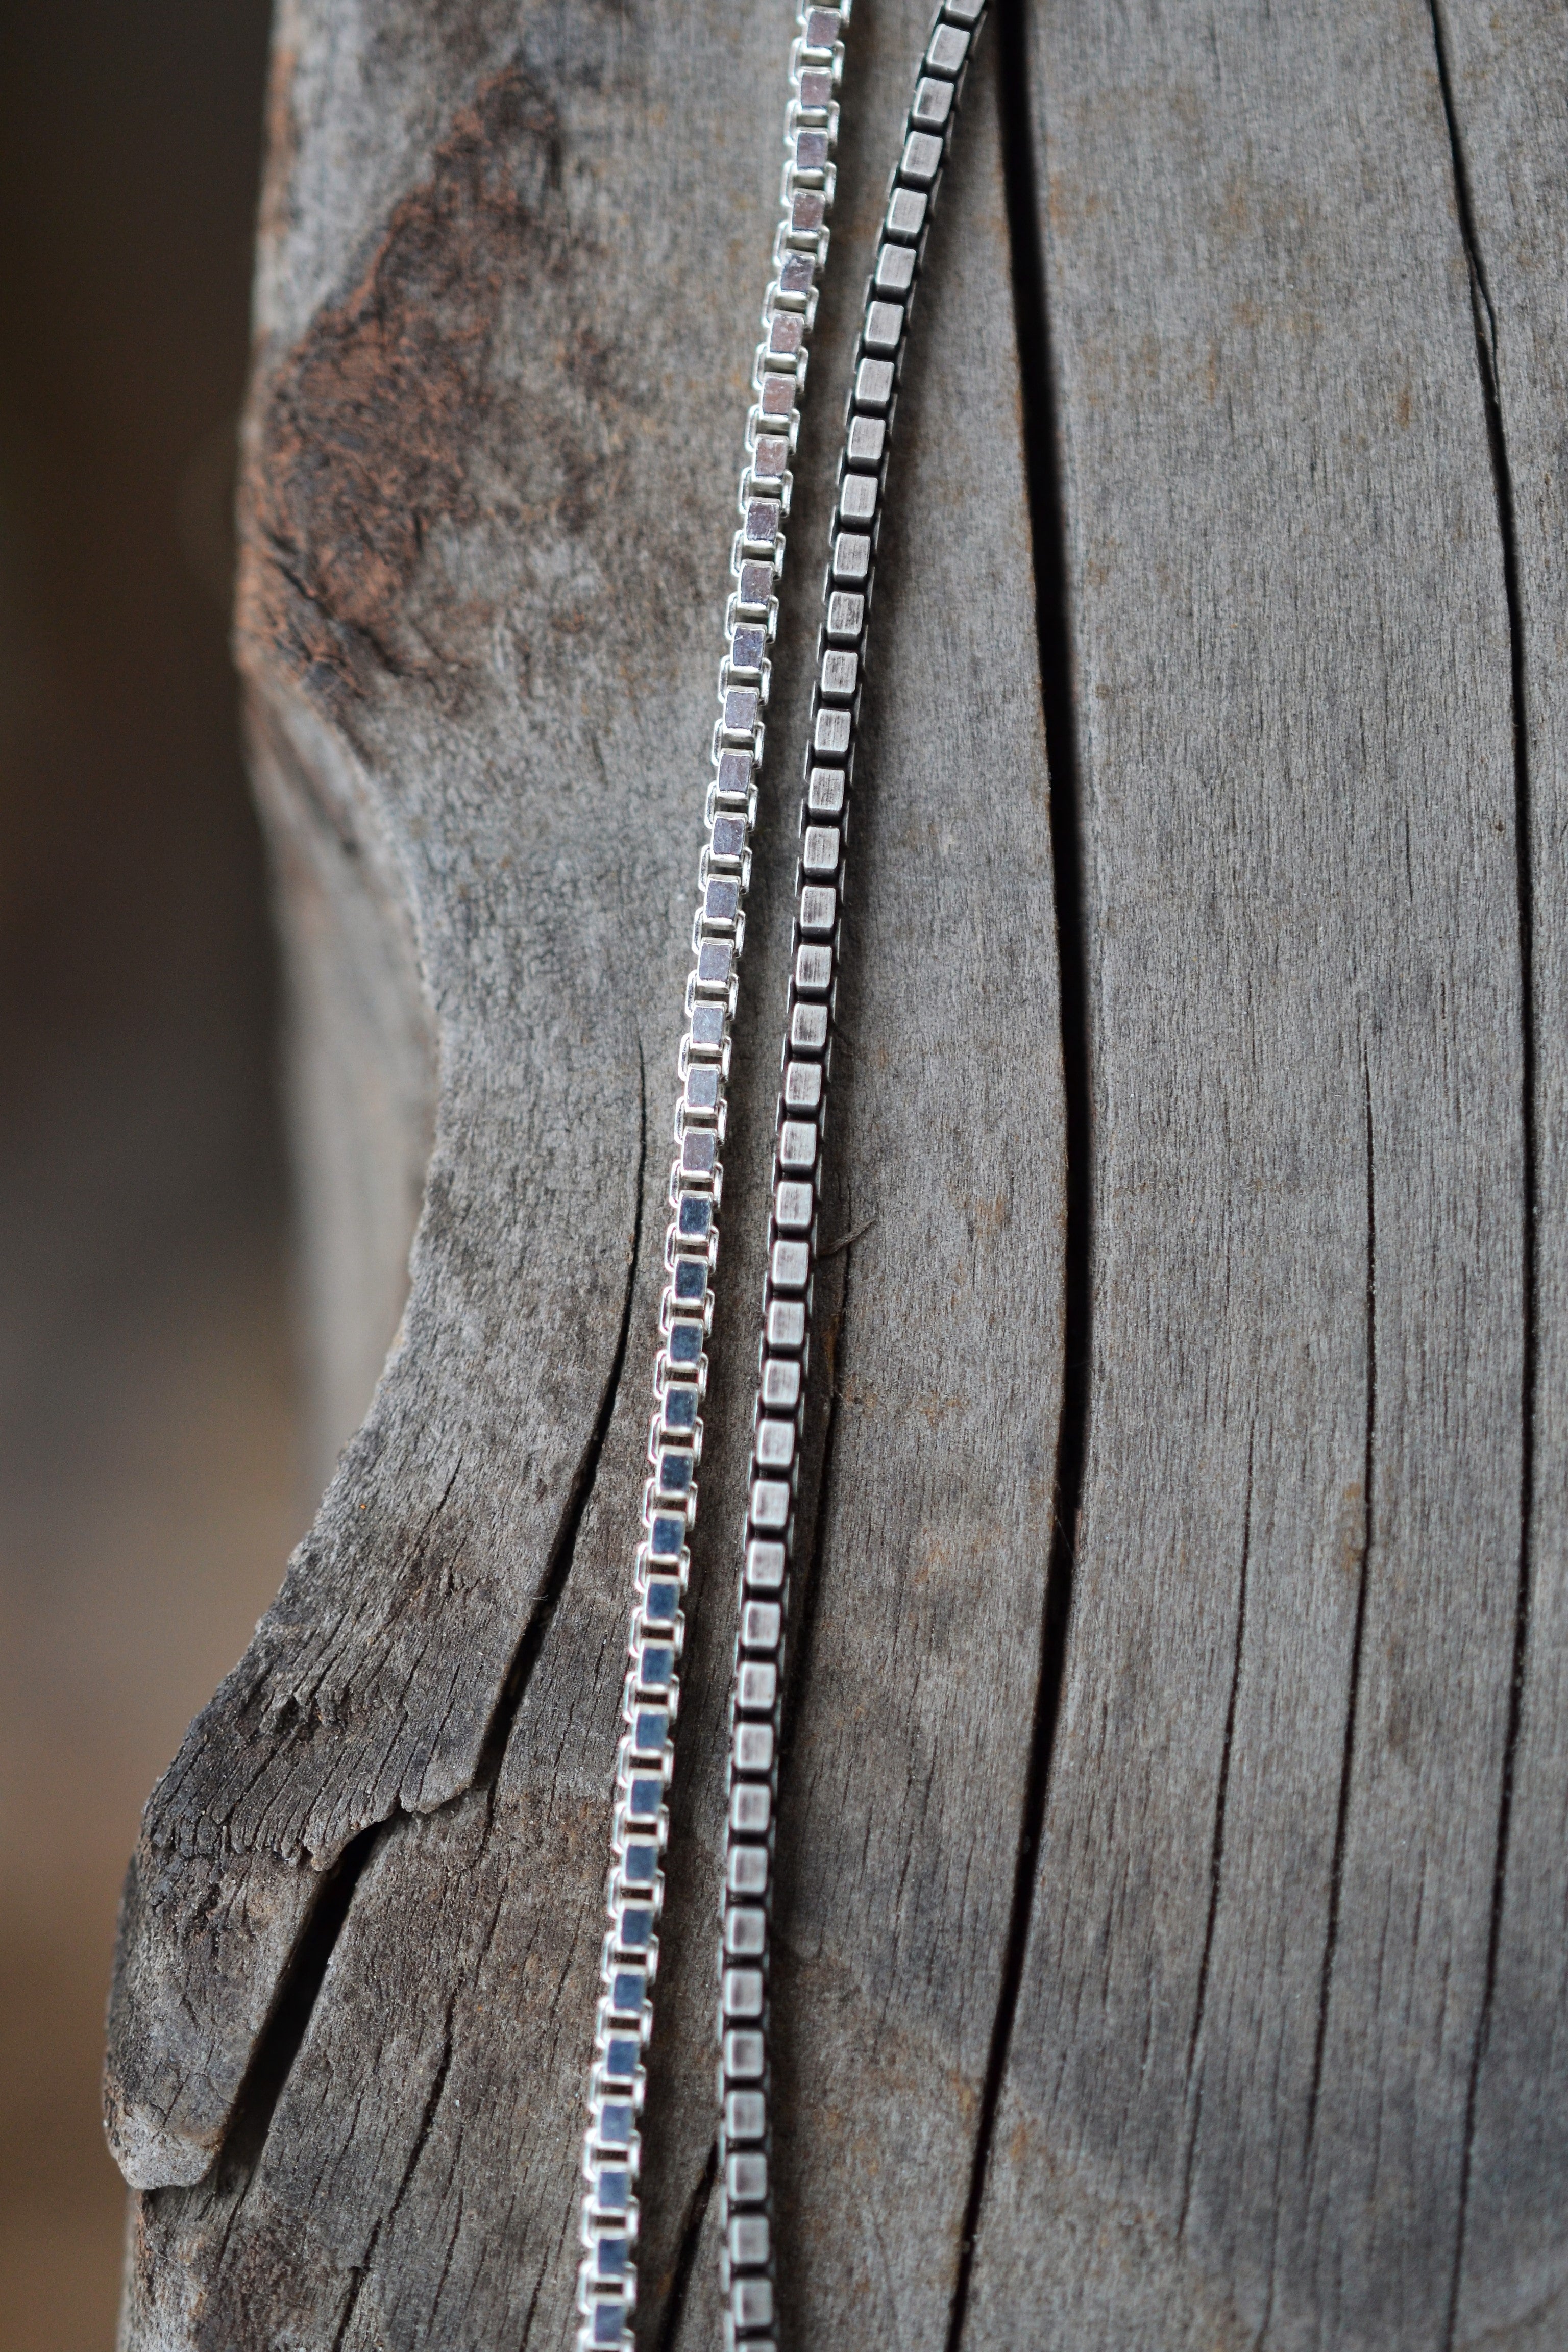 Medium Box Style Chain, Diamond Cut 1.45mm - Choose Your Length